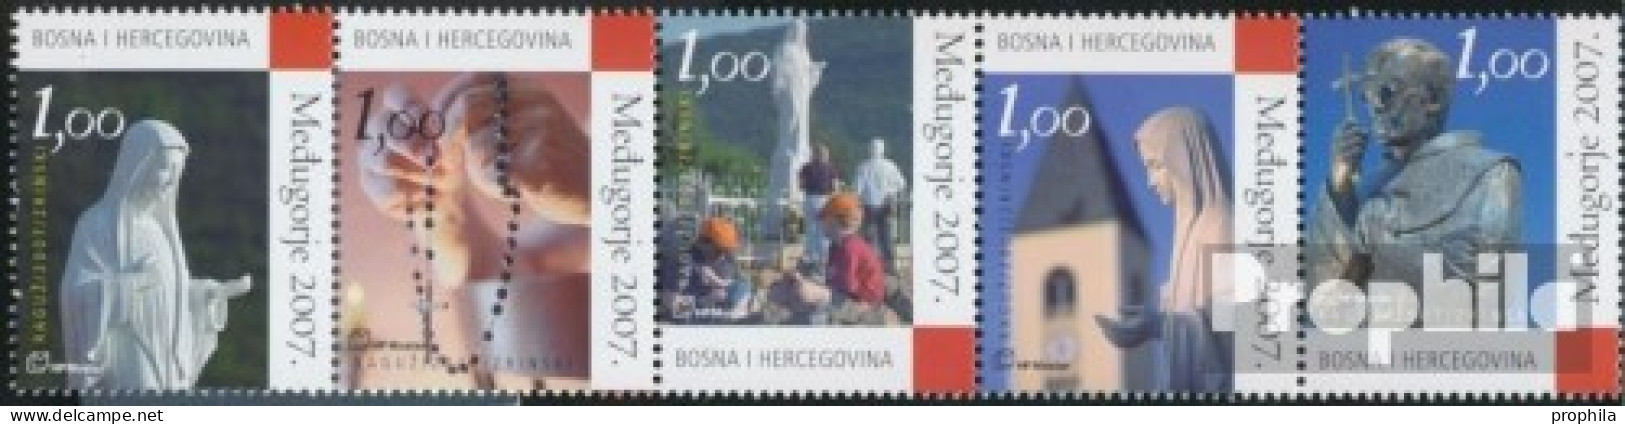 Bosnien - Kroat. Post Mostar 206-210 Fünferstreifen (kompl.Ausg.) Postfrisch 2007 Marienerscheinung - Bosnien-Herzegowina